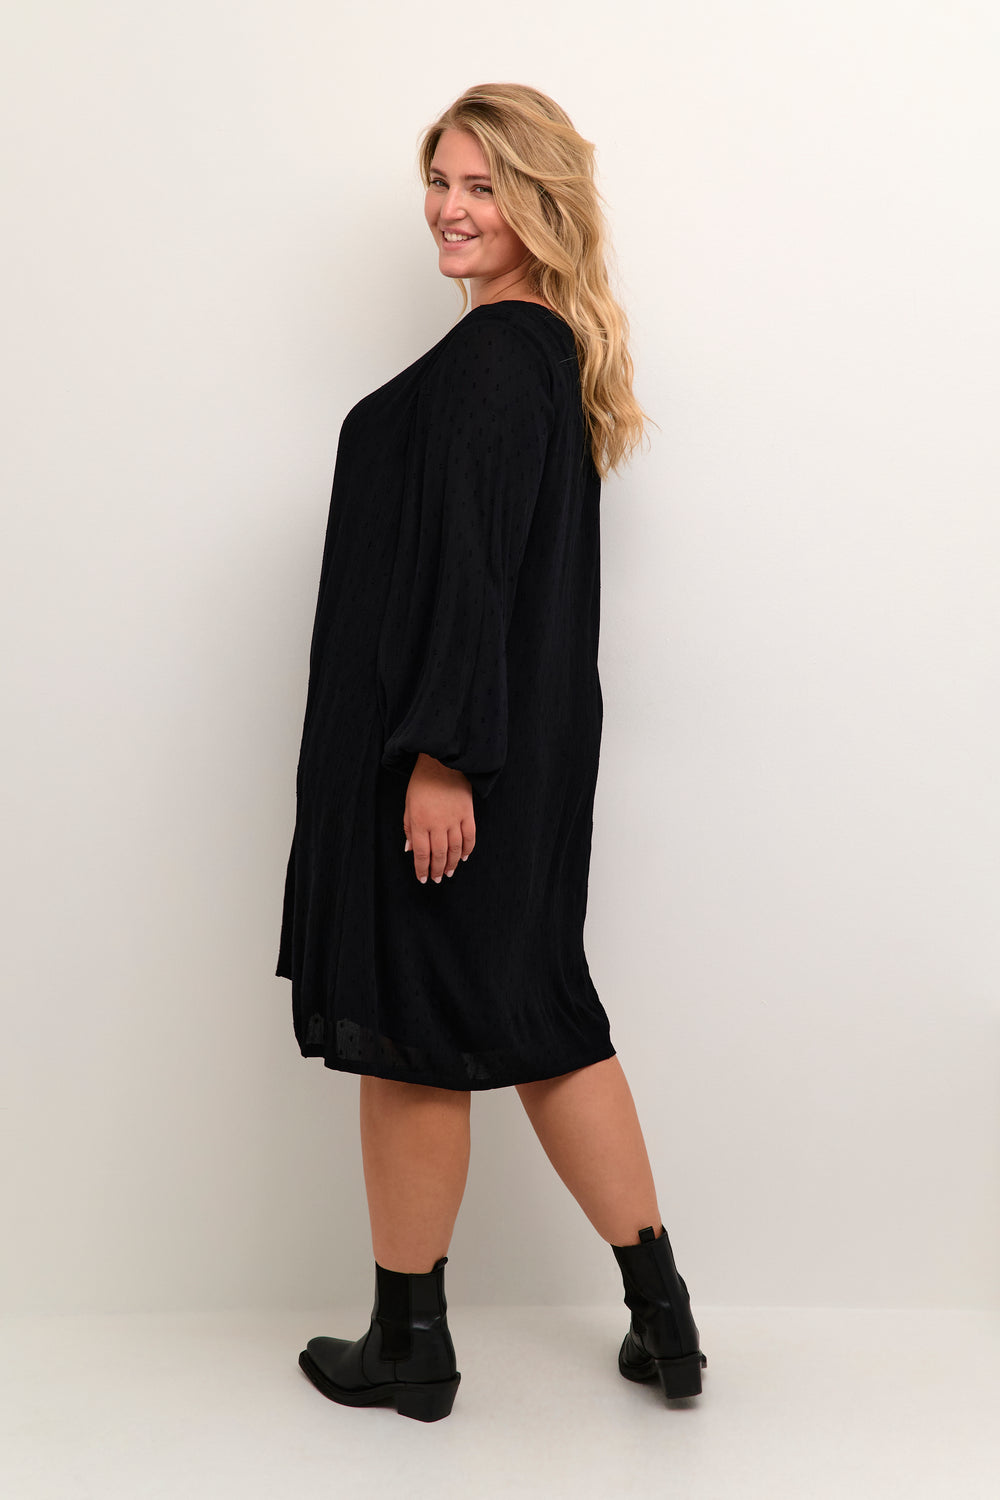 zwarte jurk met toon op toon print - kaffe curve - - grote maten - dameskleding - kledingwinkel - herent - leuven